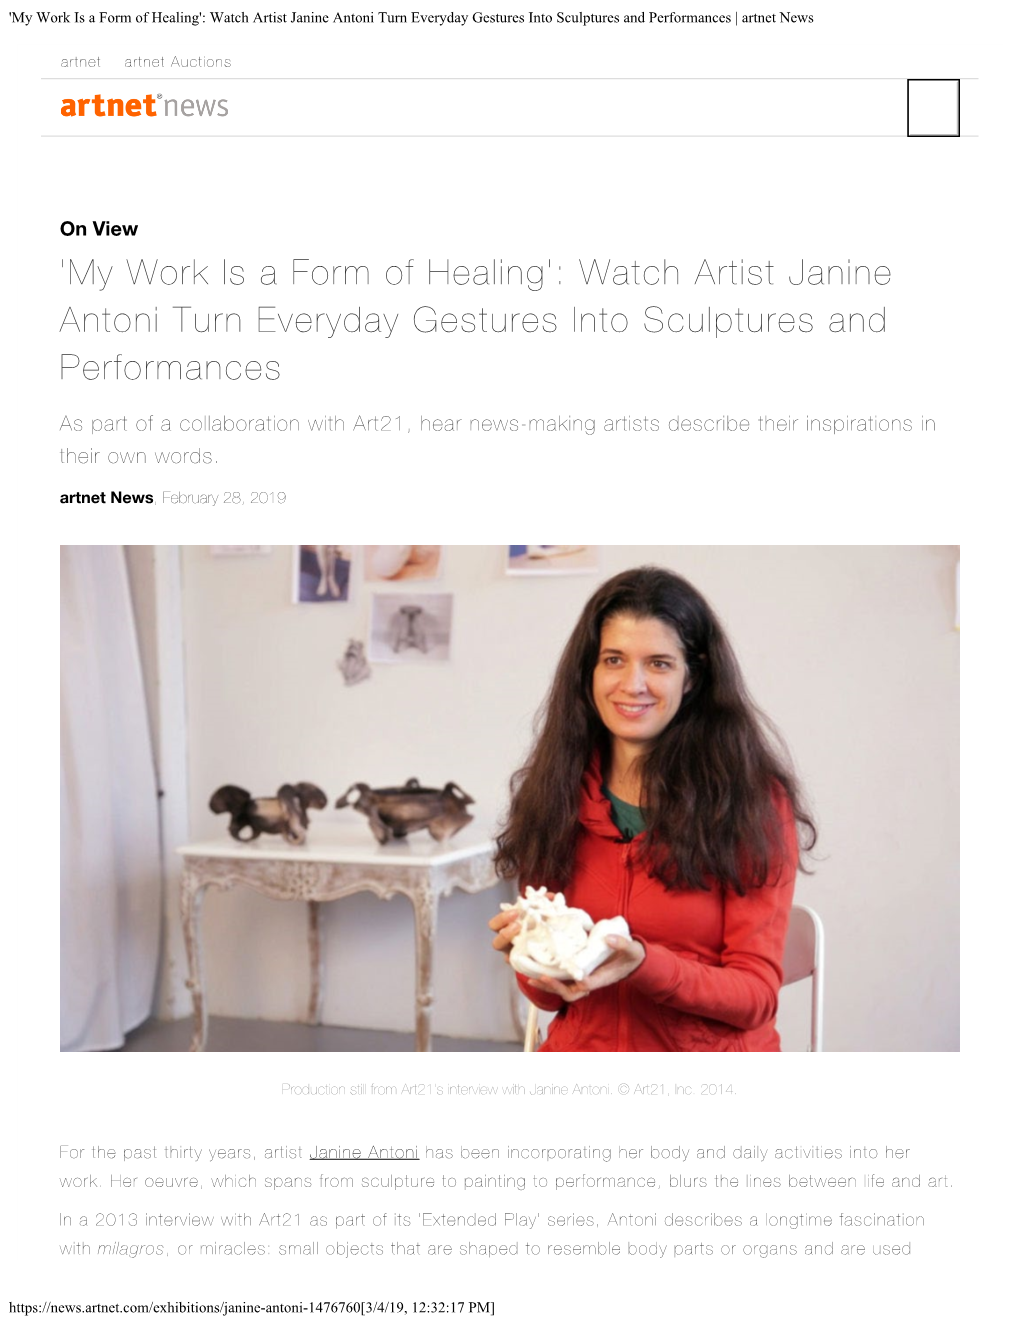 Watch Artist Janine Antoni Turn Everyday Gestures Into Sculptures and Performances | Artnet News